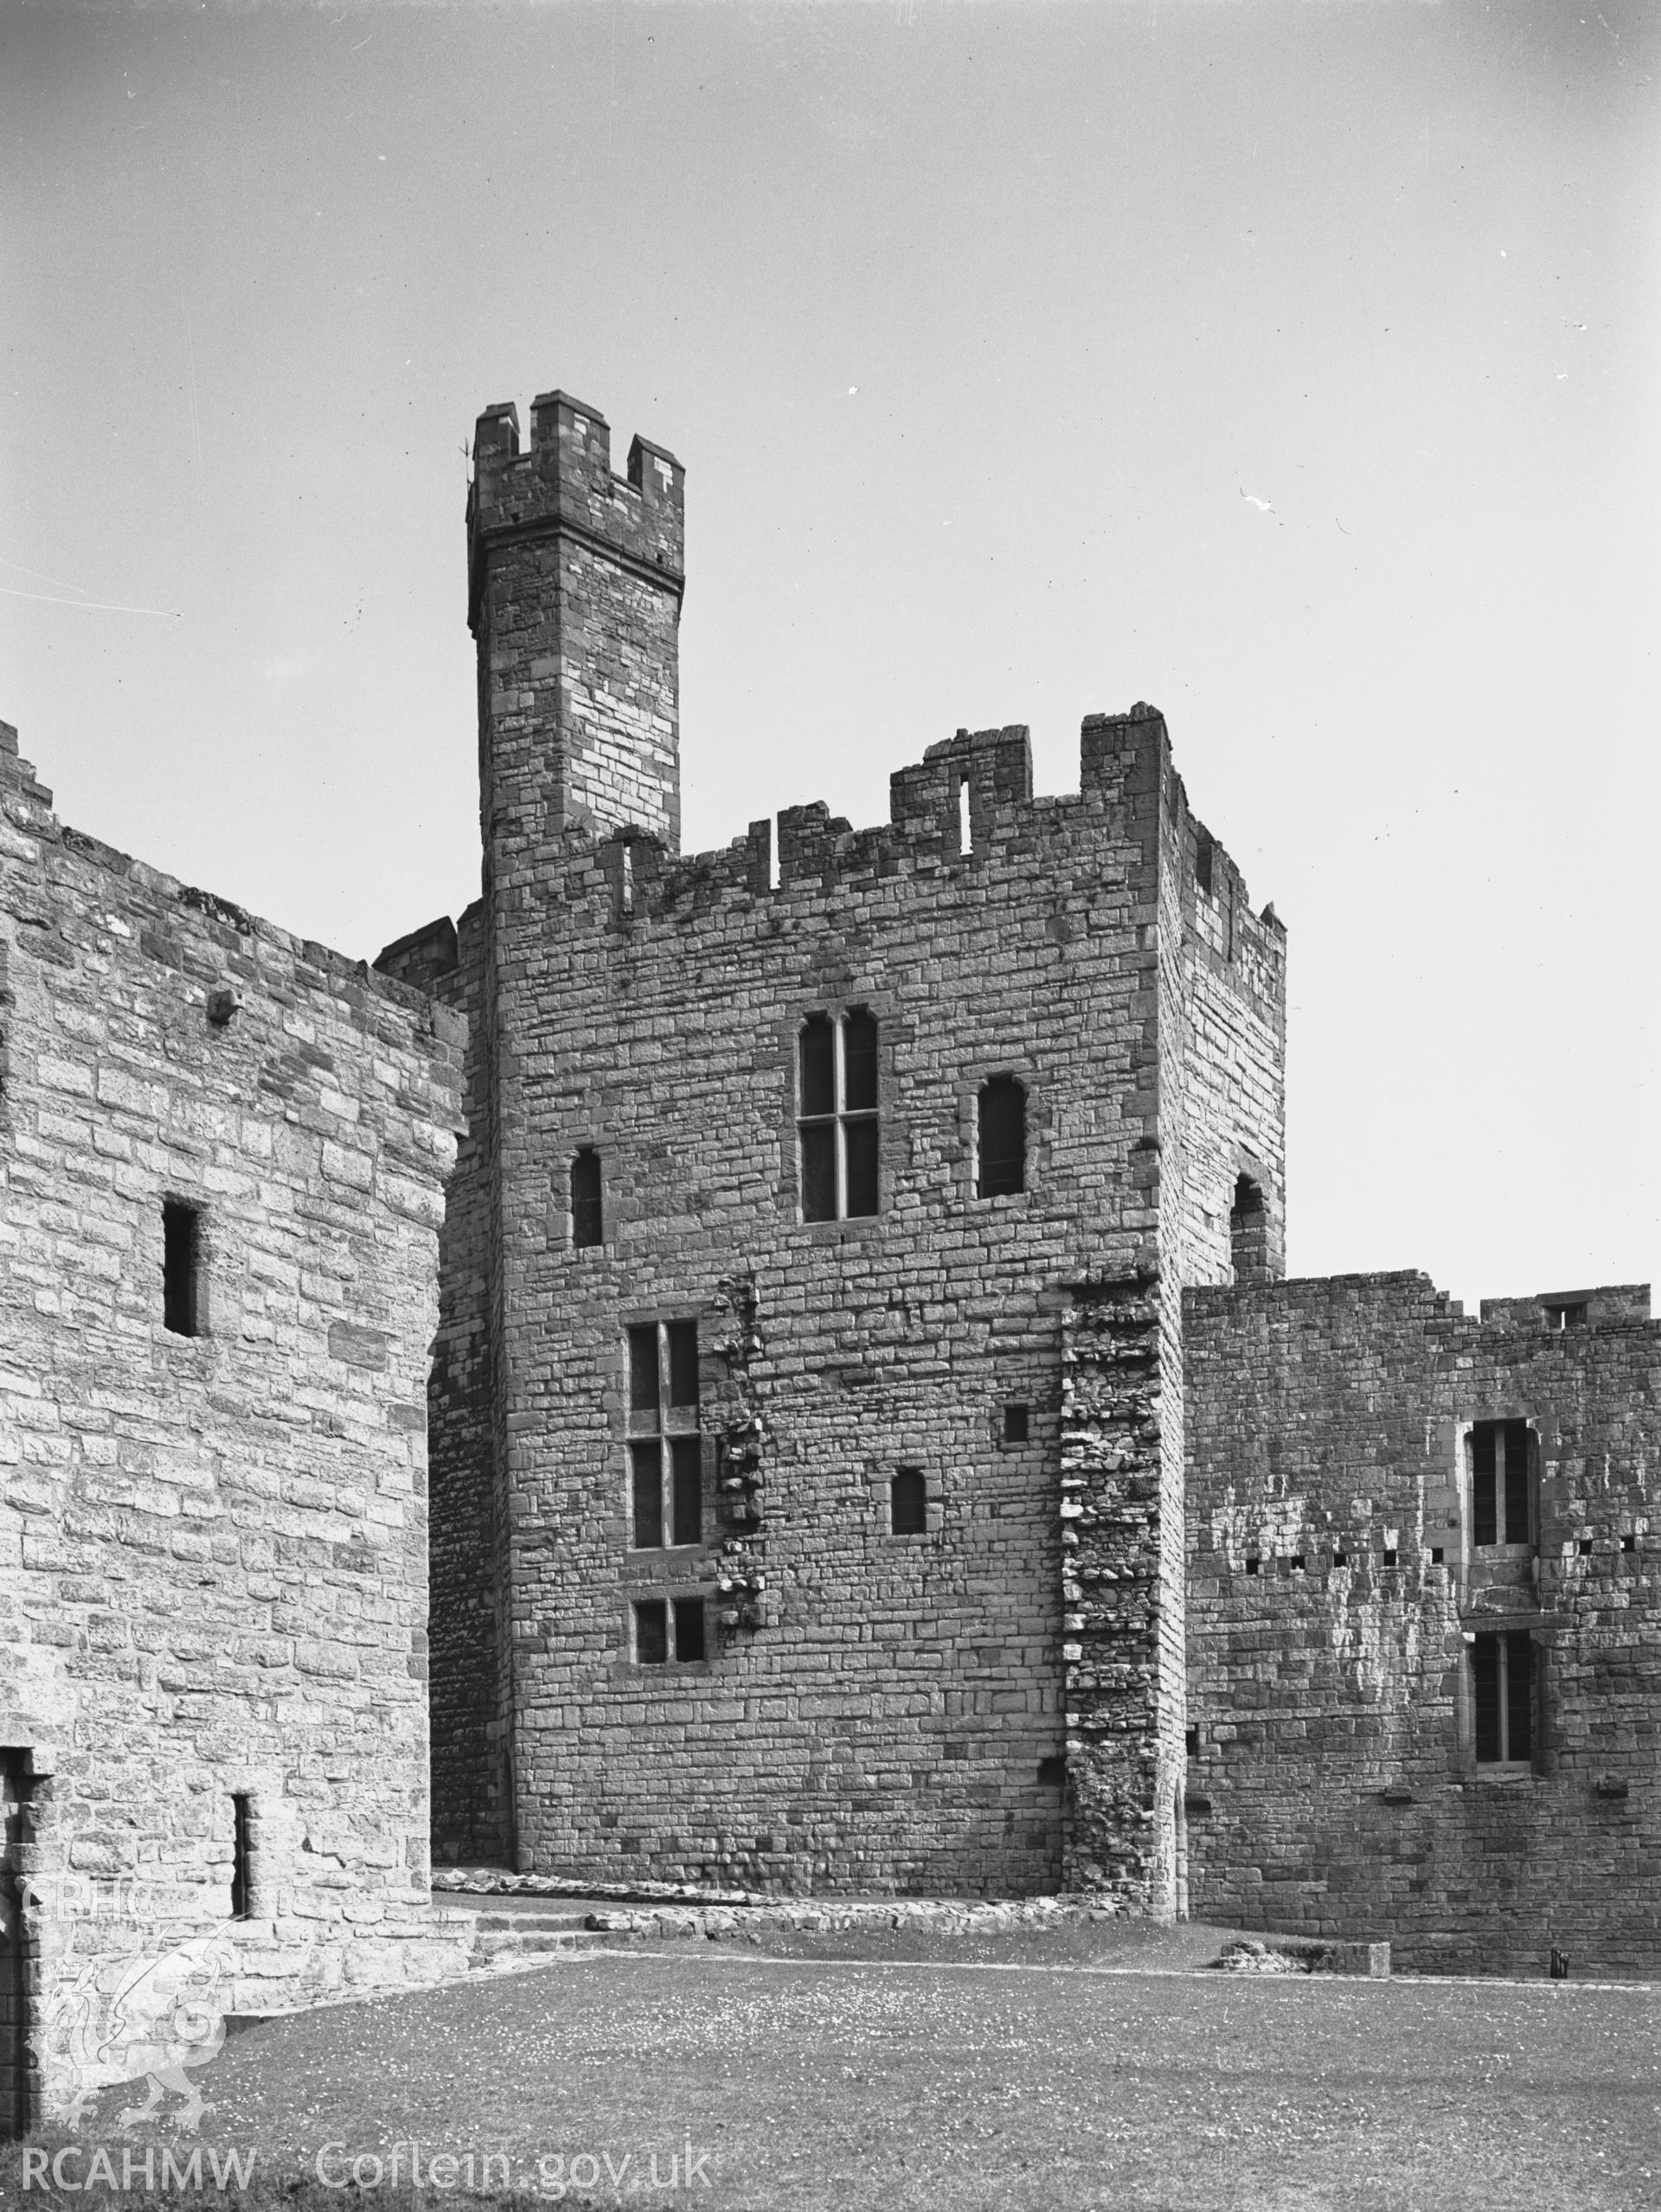 The Chamberlain Tower on the inner bailey.